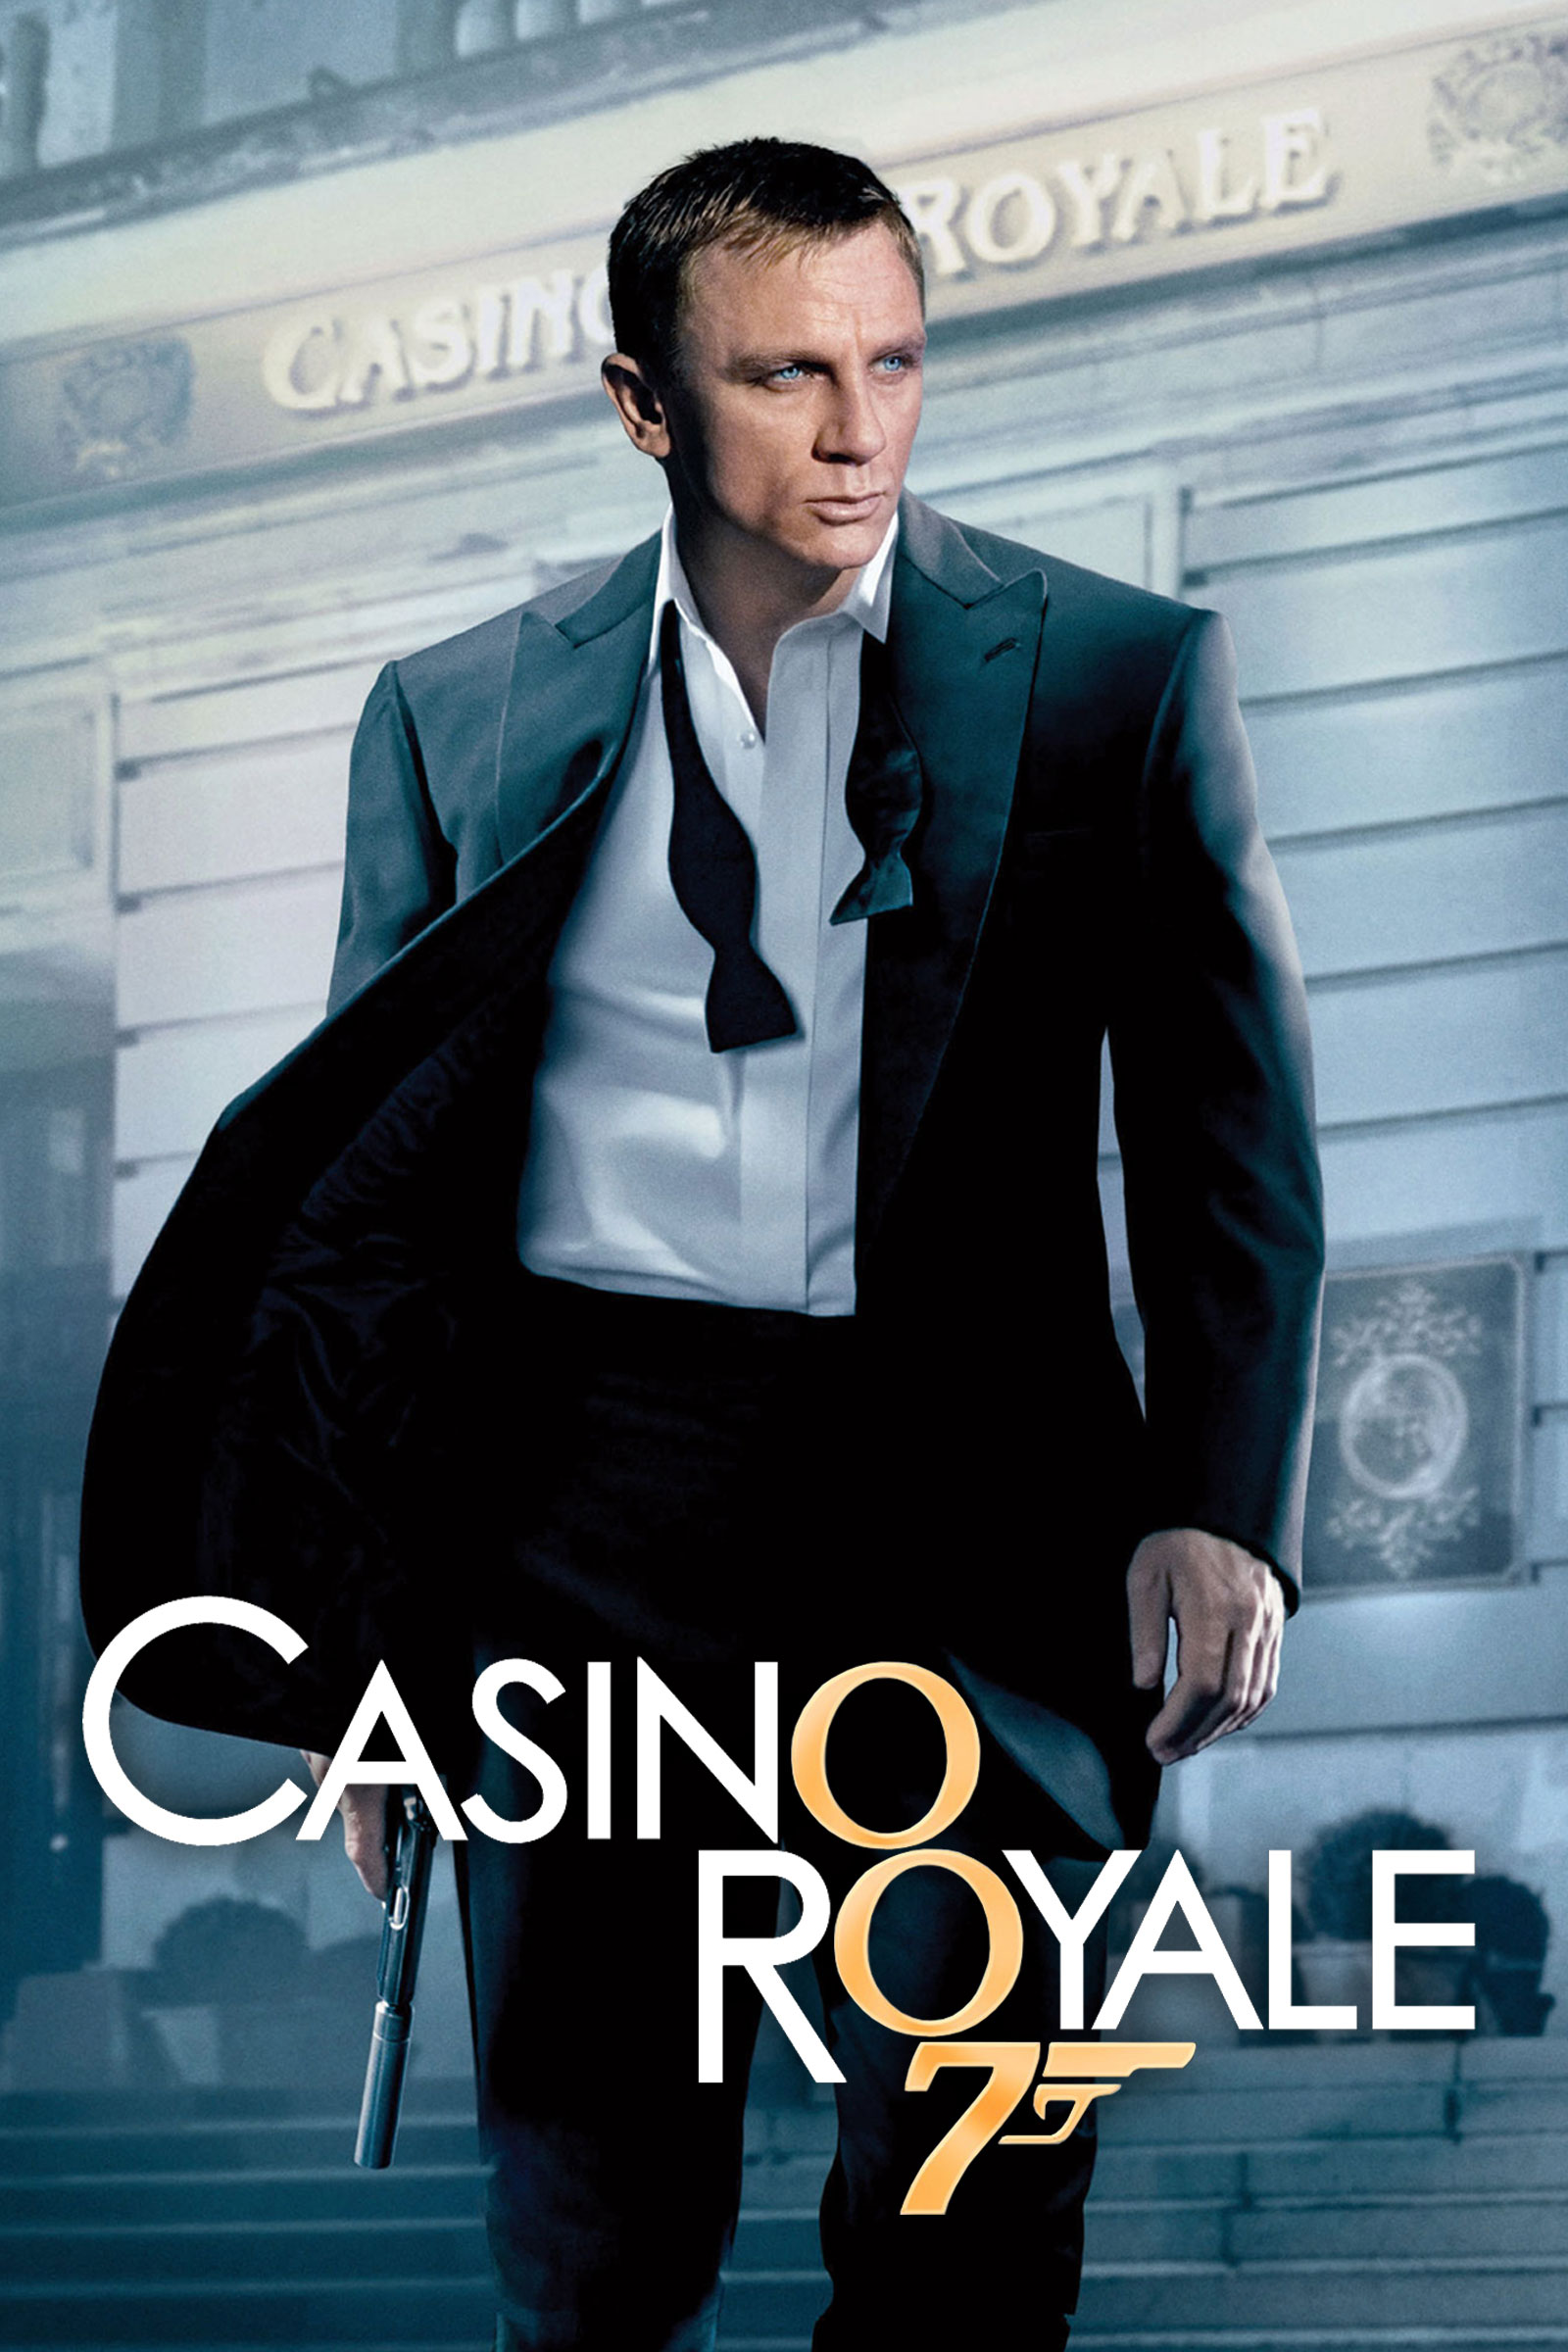 watch james bond casino royale free putlocker